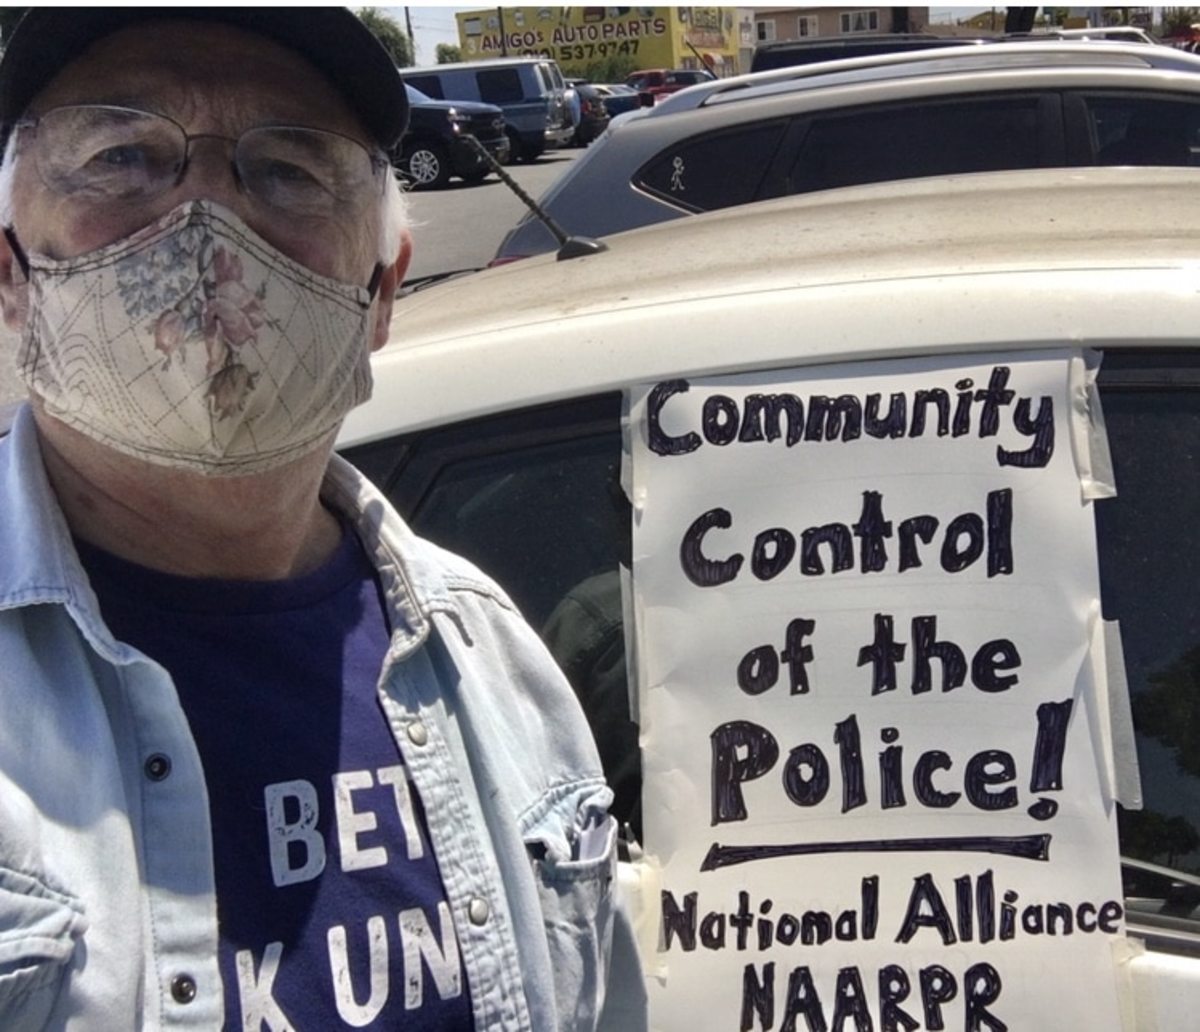  Car caravan in Compton demands Community Control of the Police.